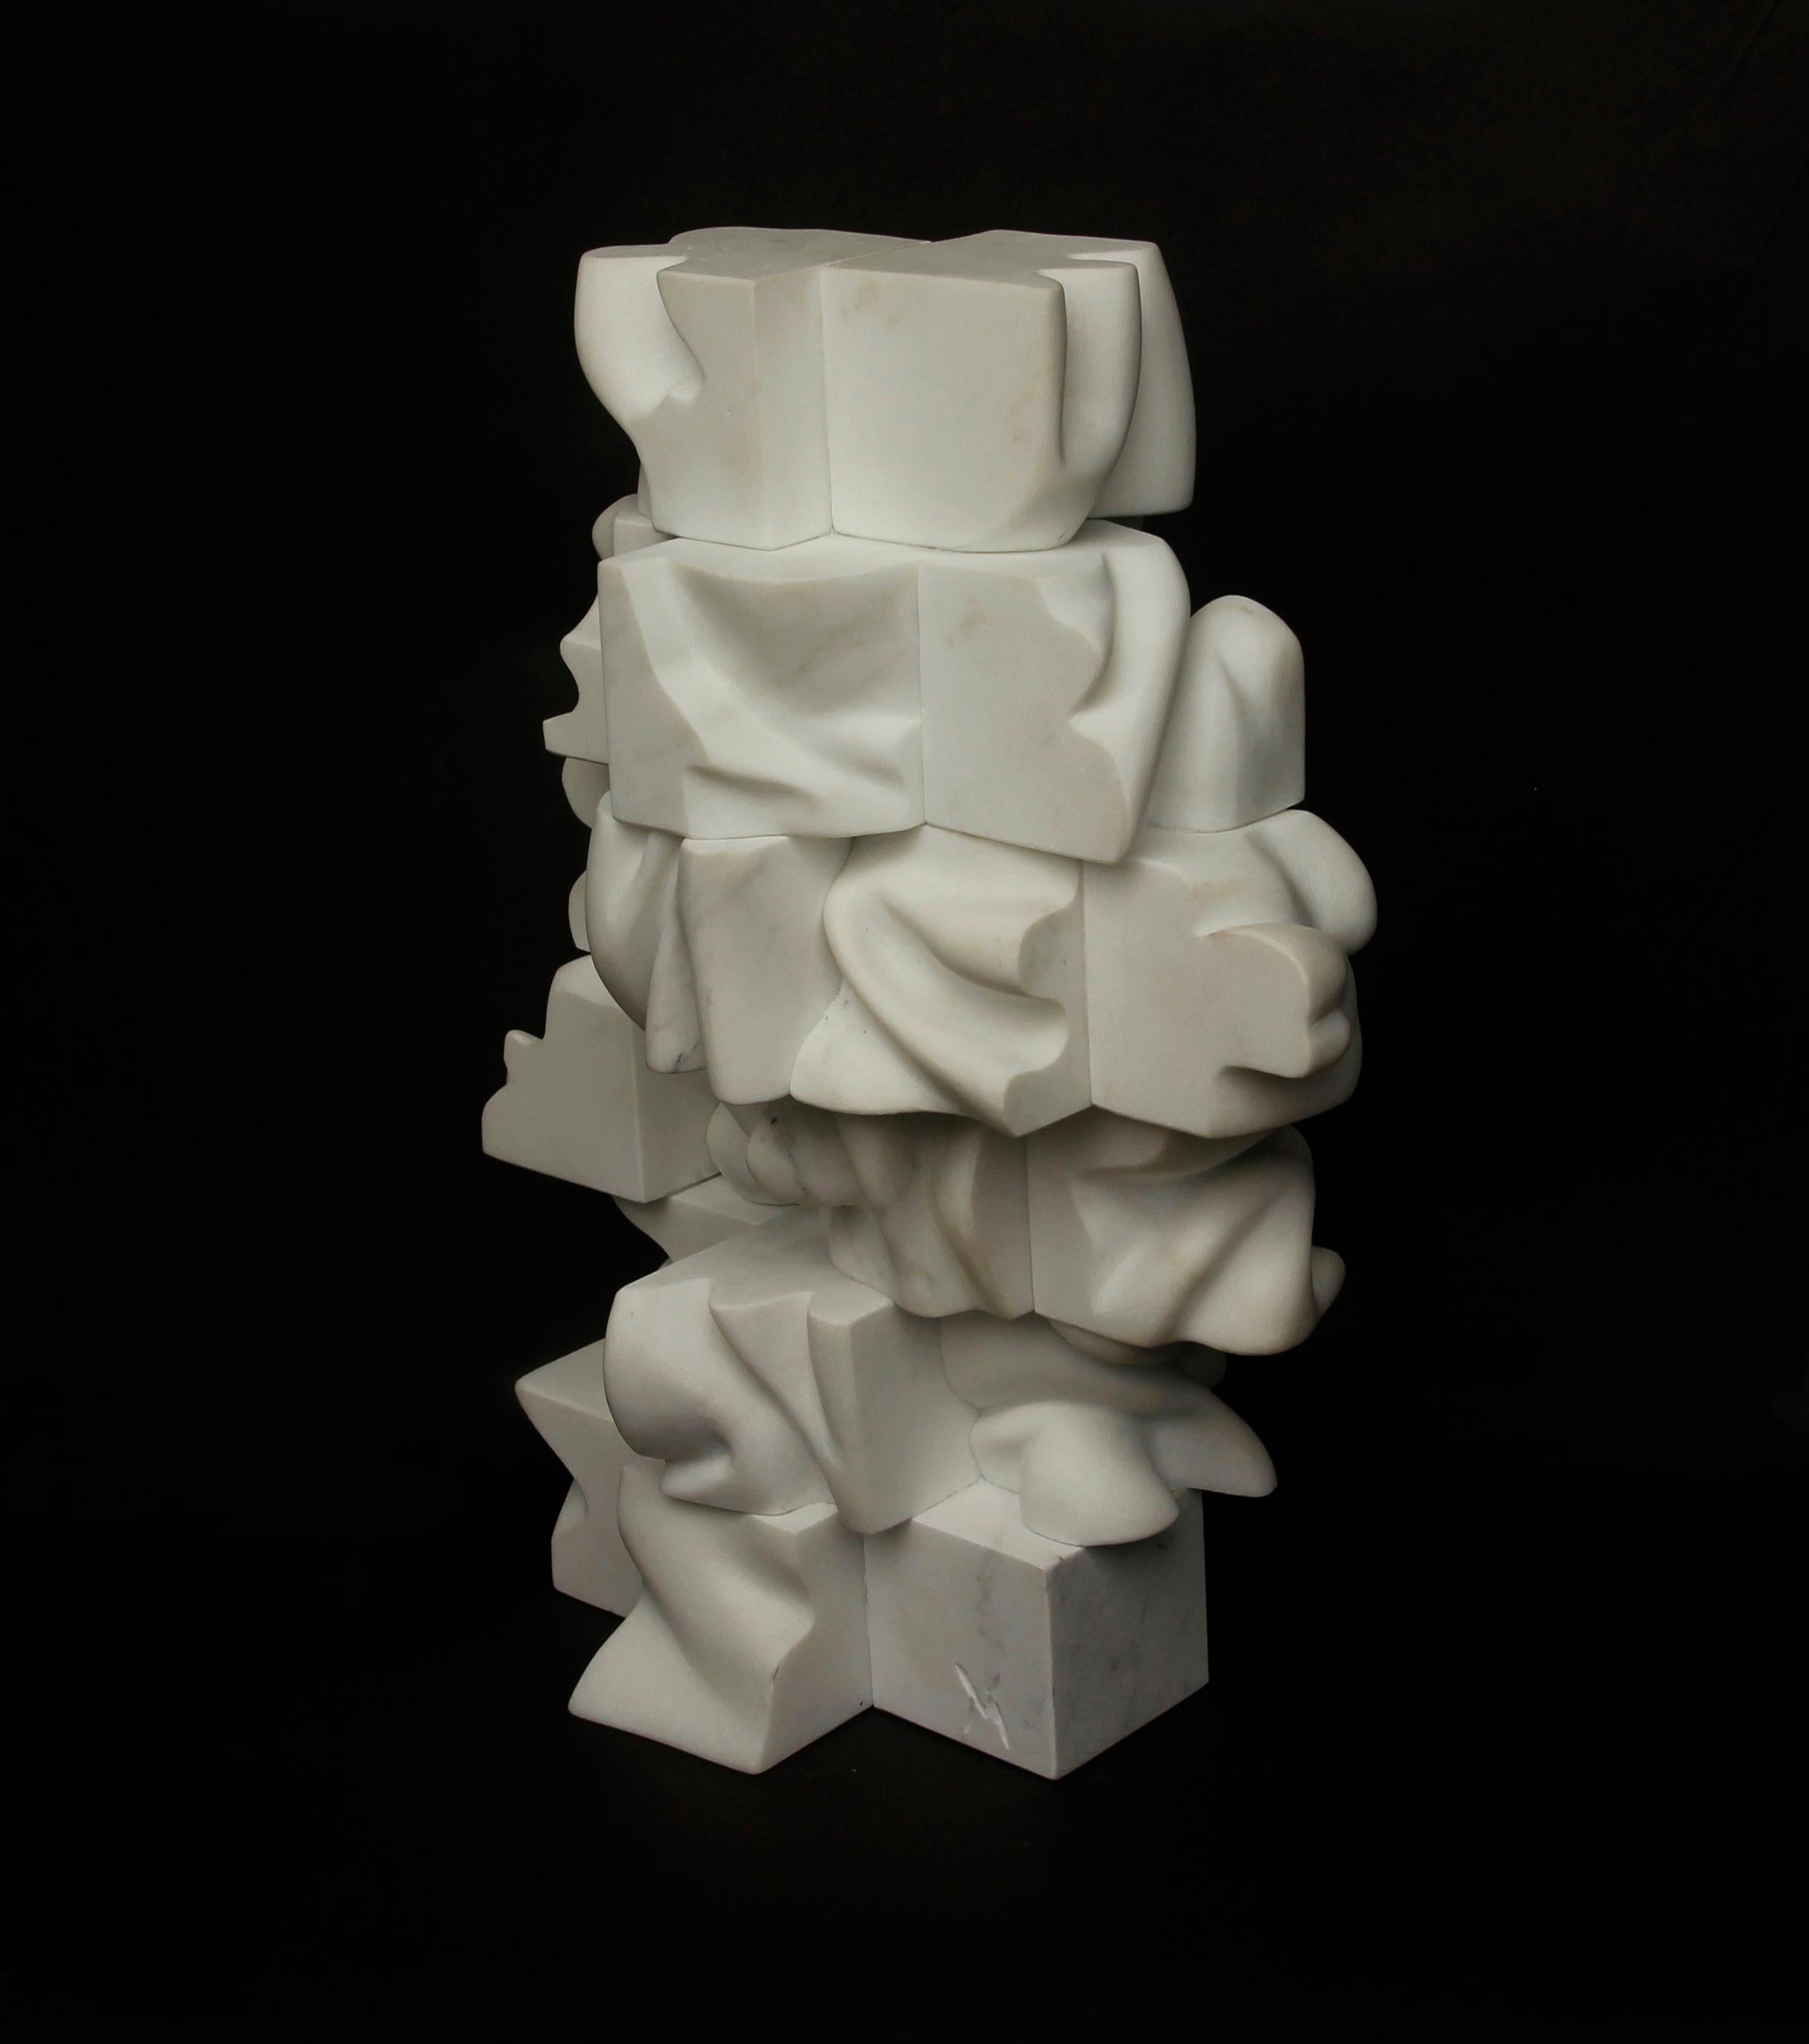 26 Cubes - Sculpture by Martin Varo